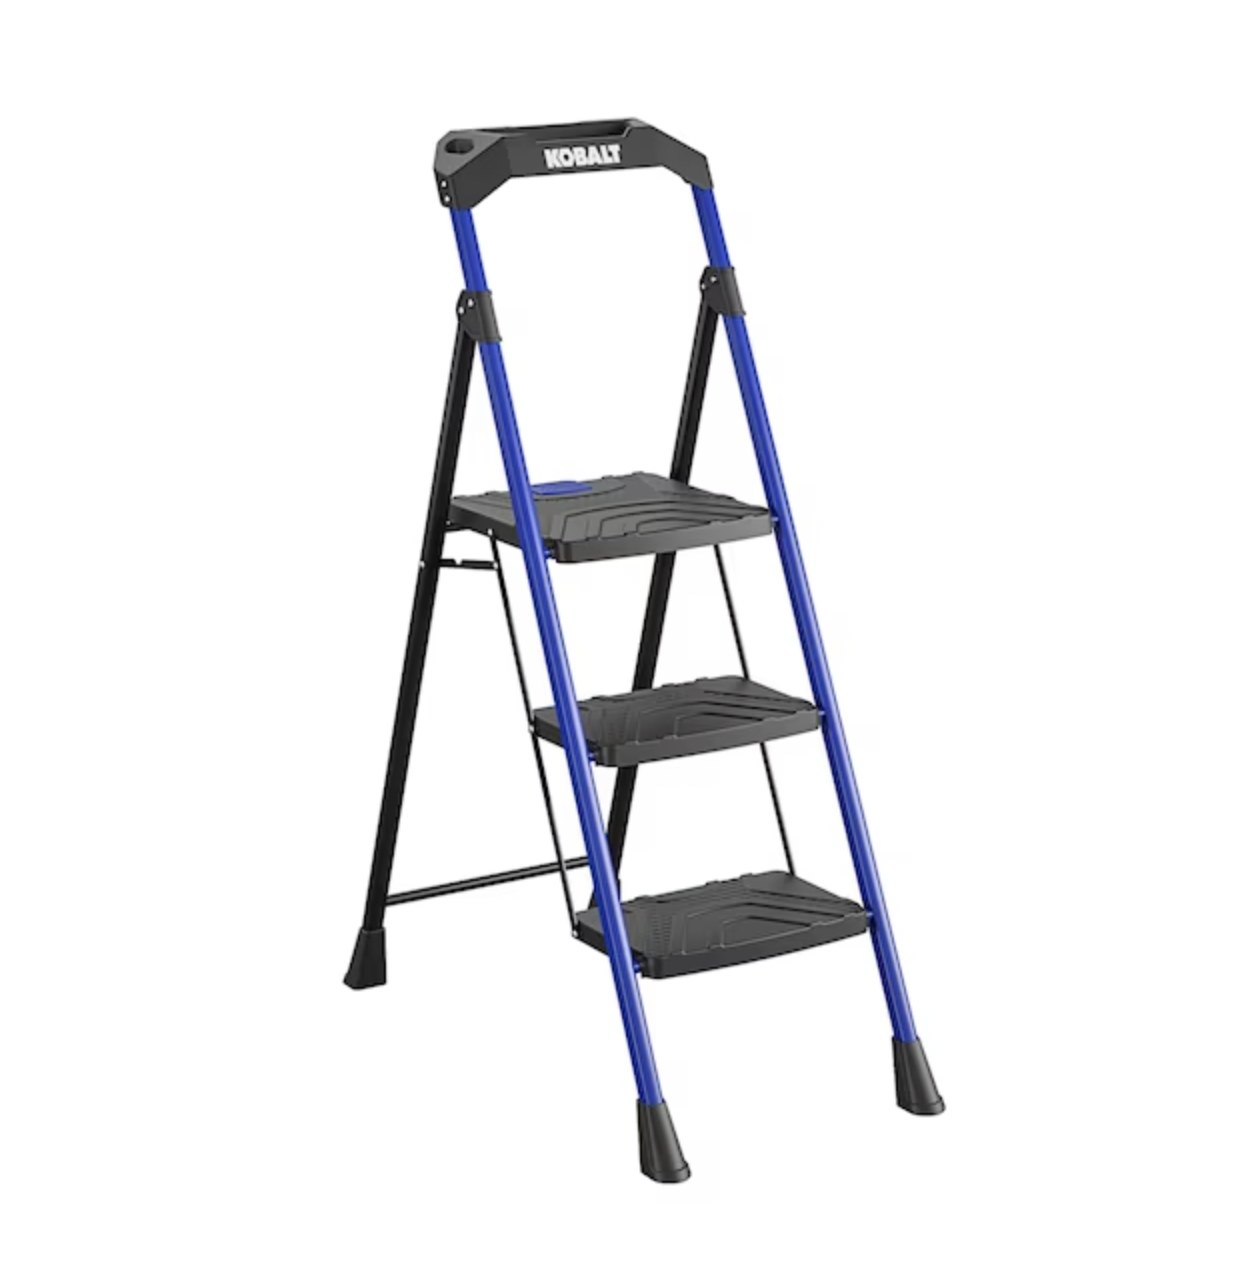 The 3-level ladder